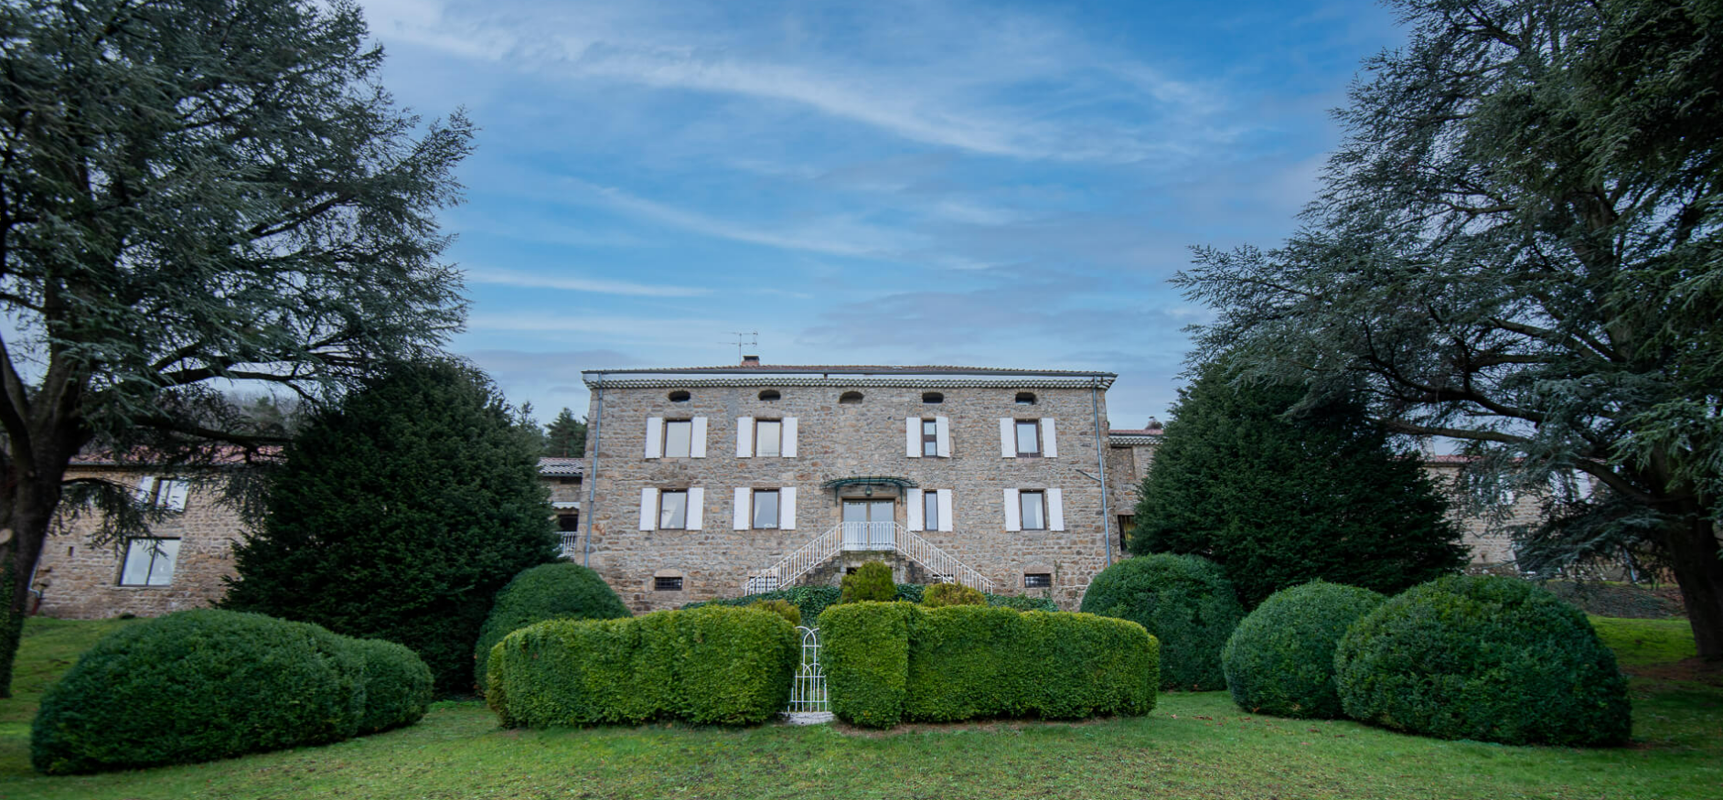  Mansion/Castle Satillieu